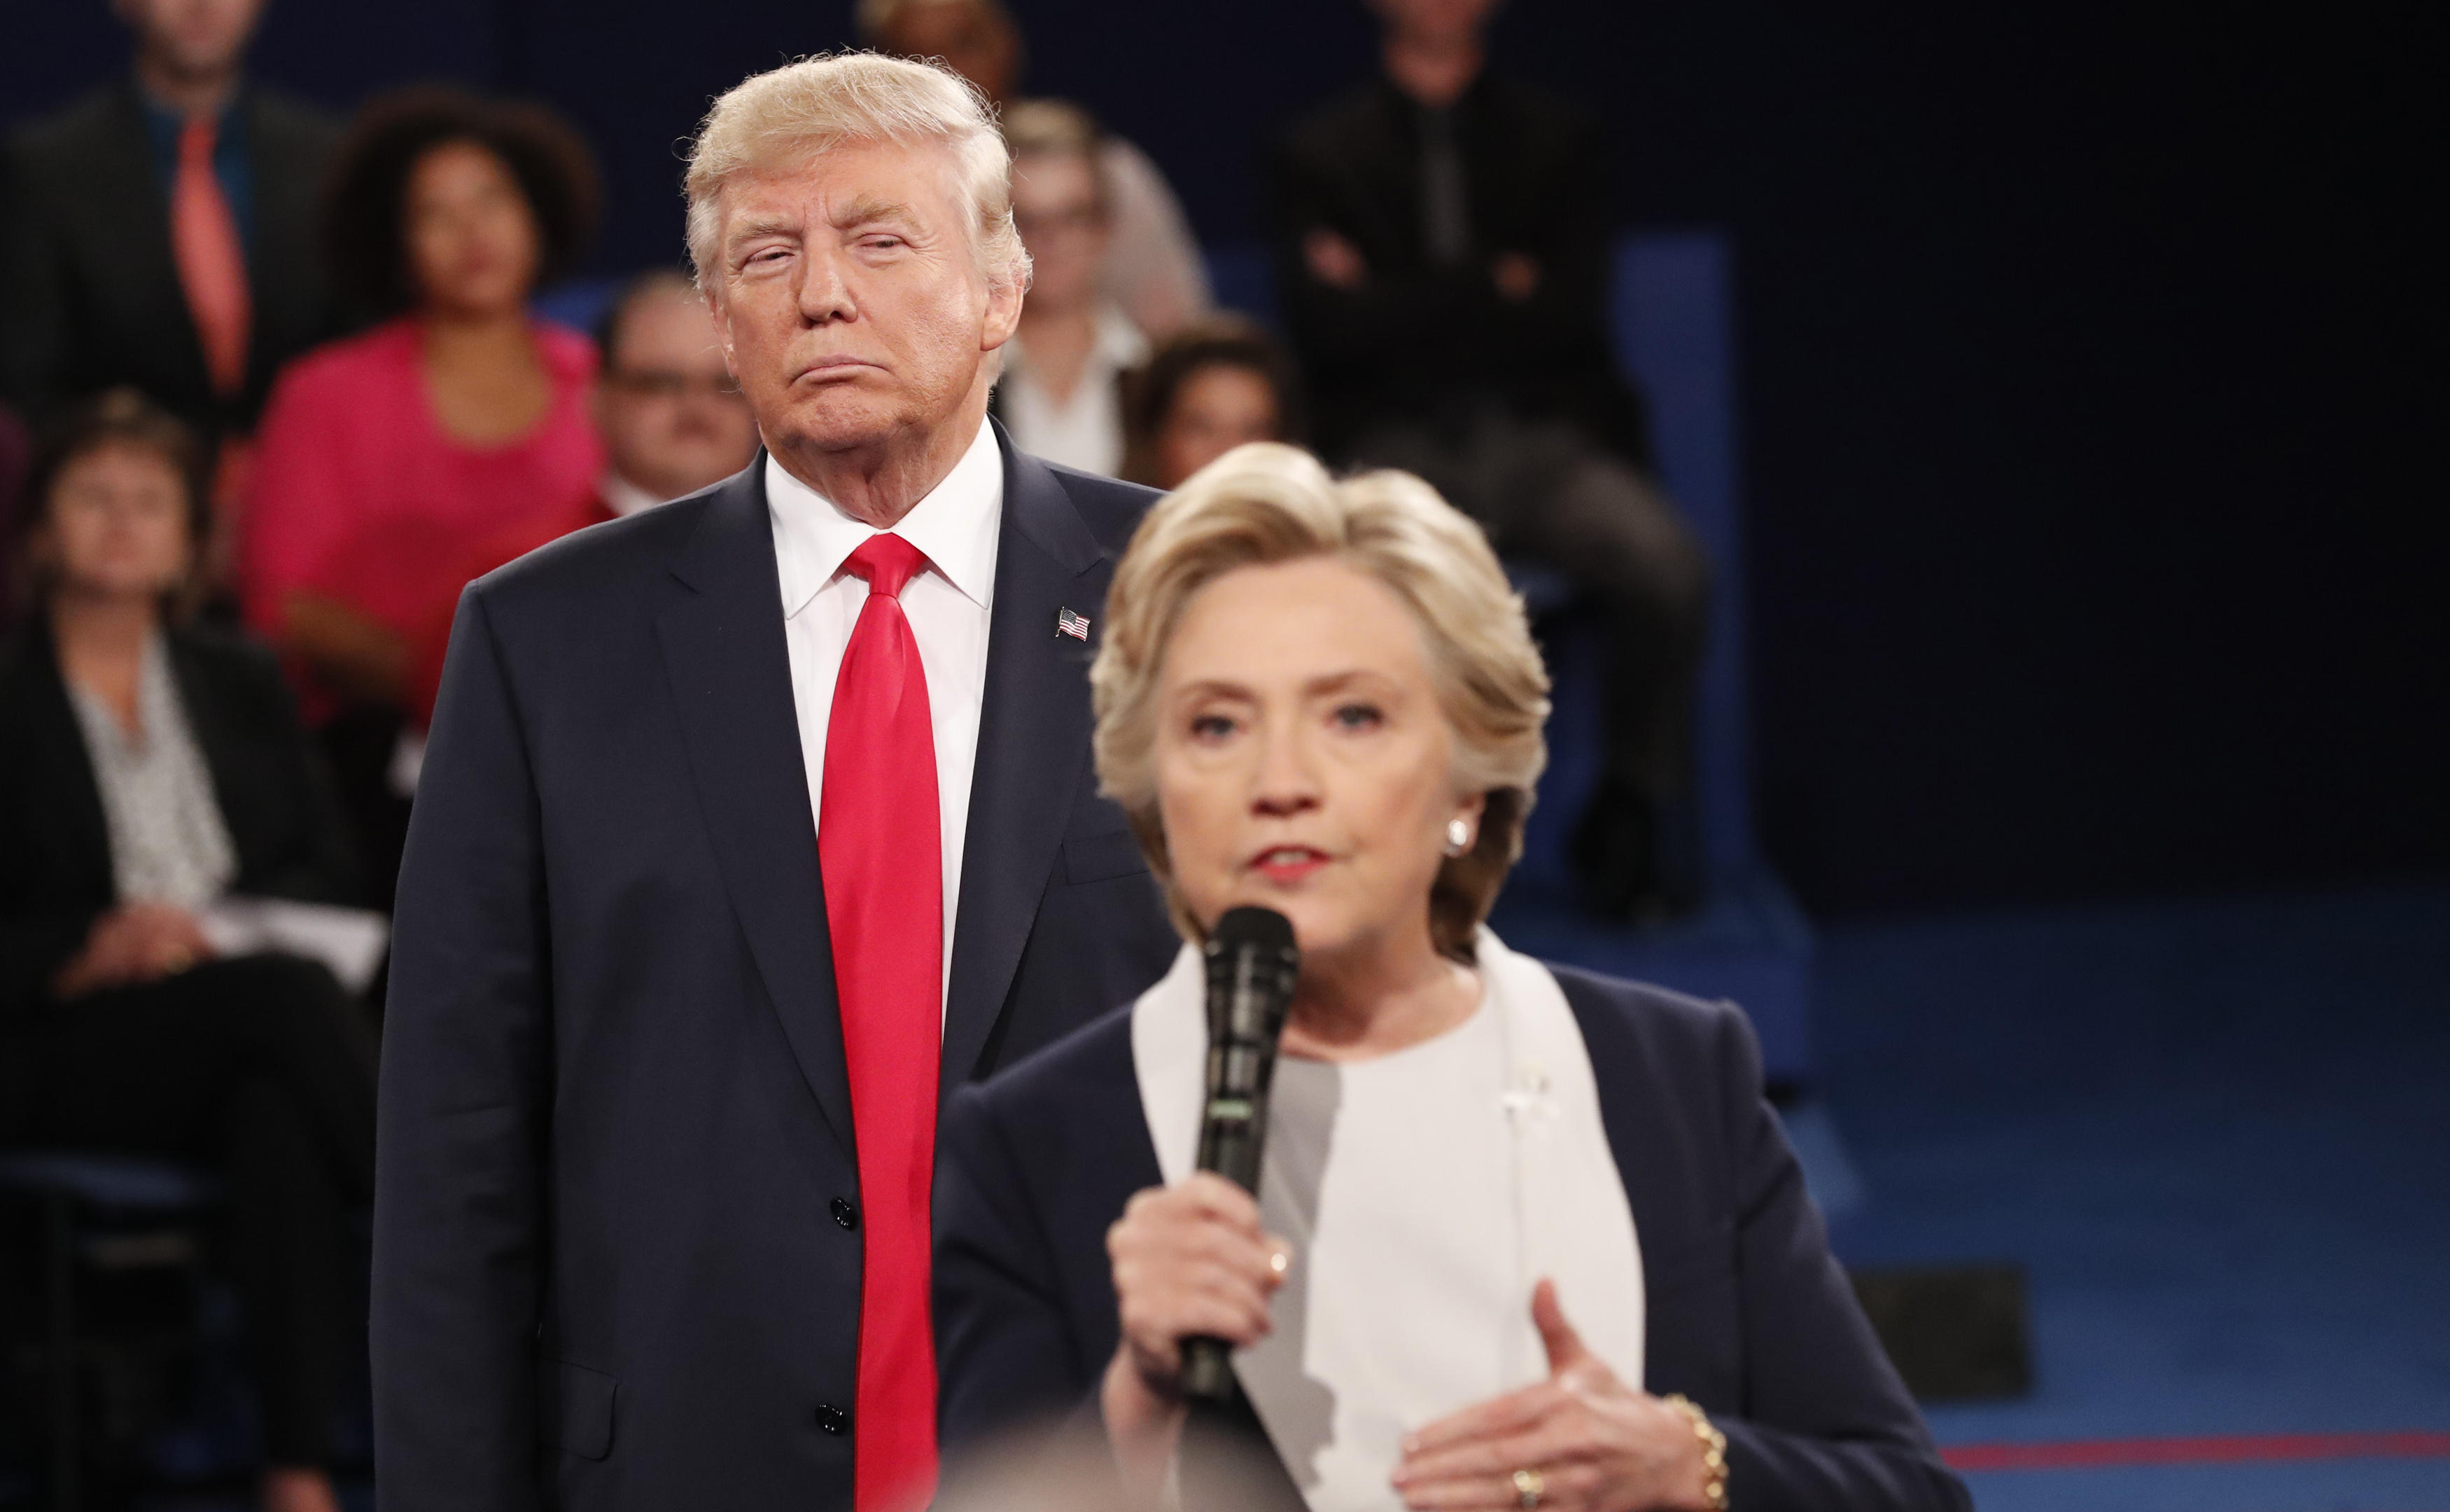 In book, Clinton says Trump's debate stalking made her 